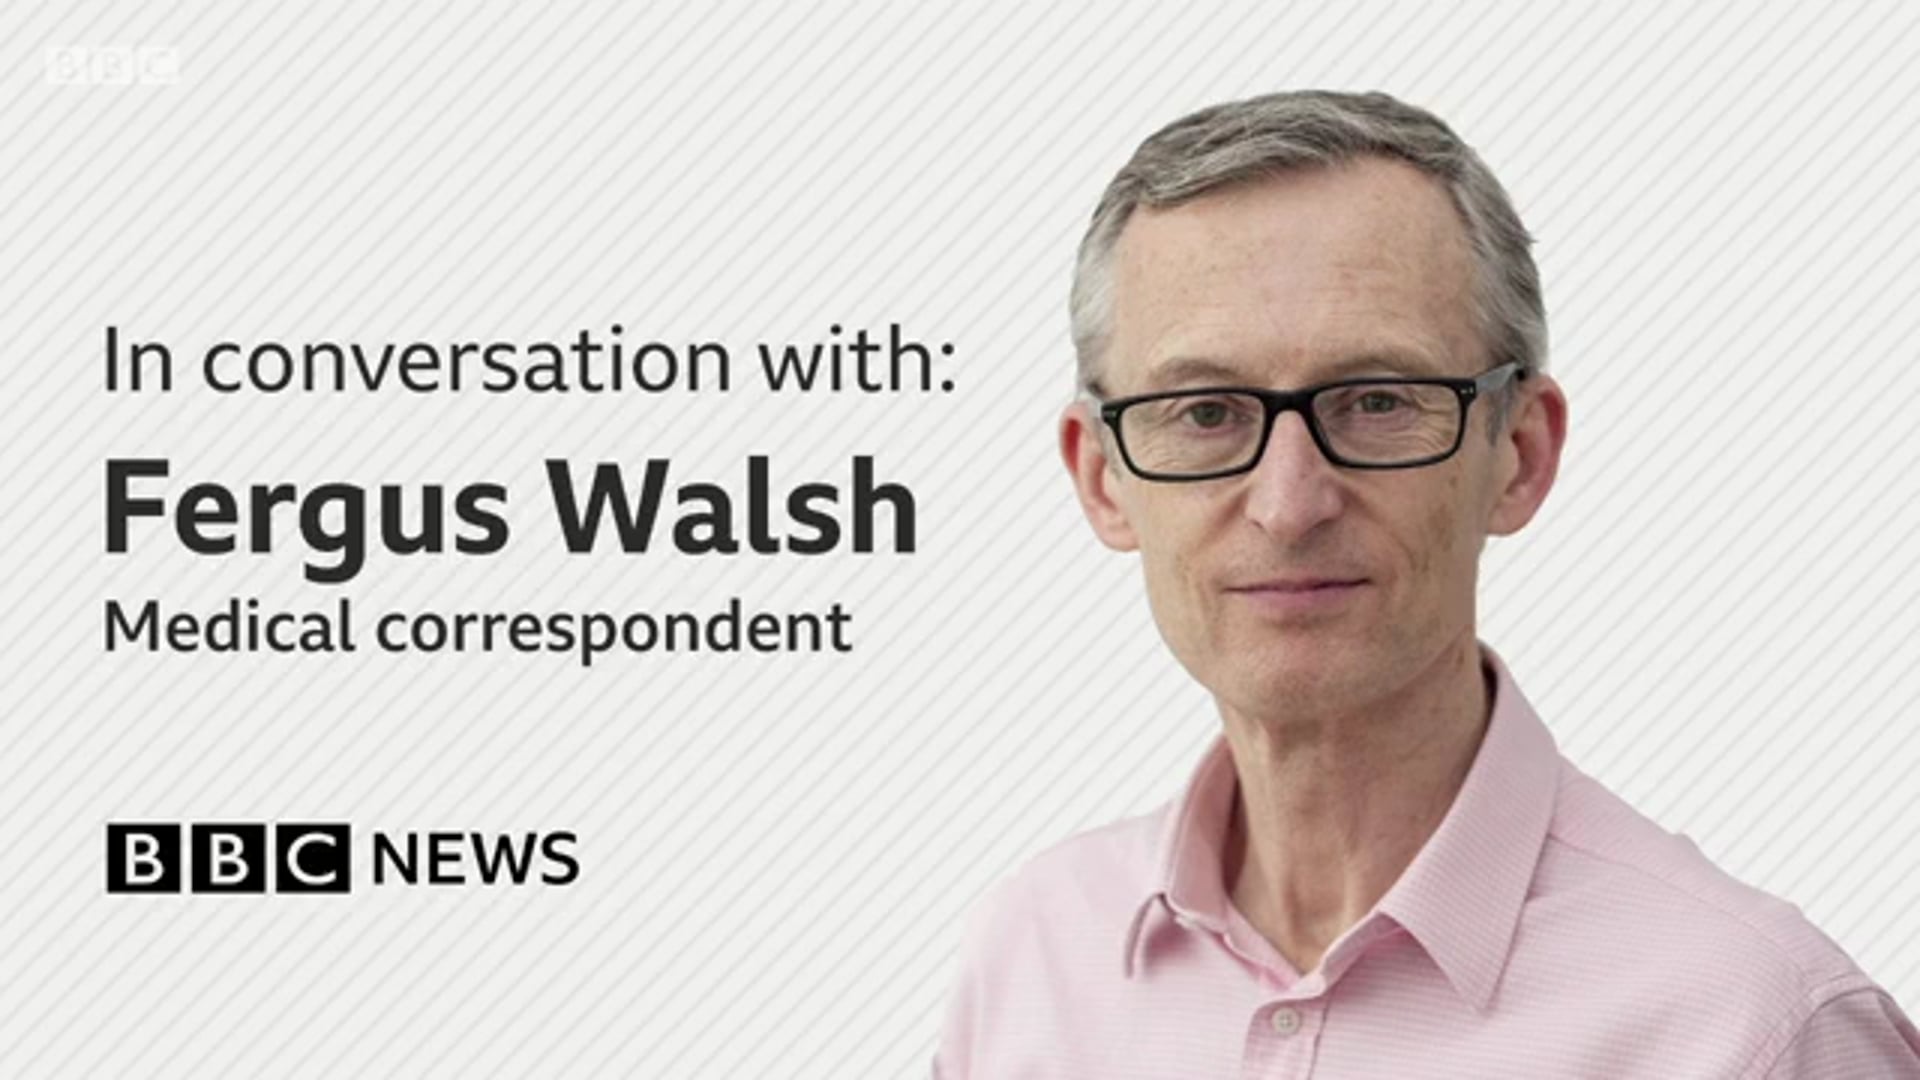 Ciara Riordan interviews BBC Medical correspondent Fergus Walsh - BBC News FACEBOOK LIVE